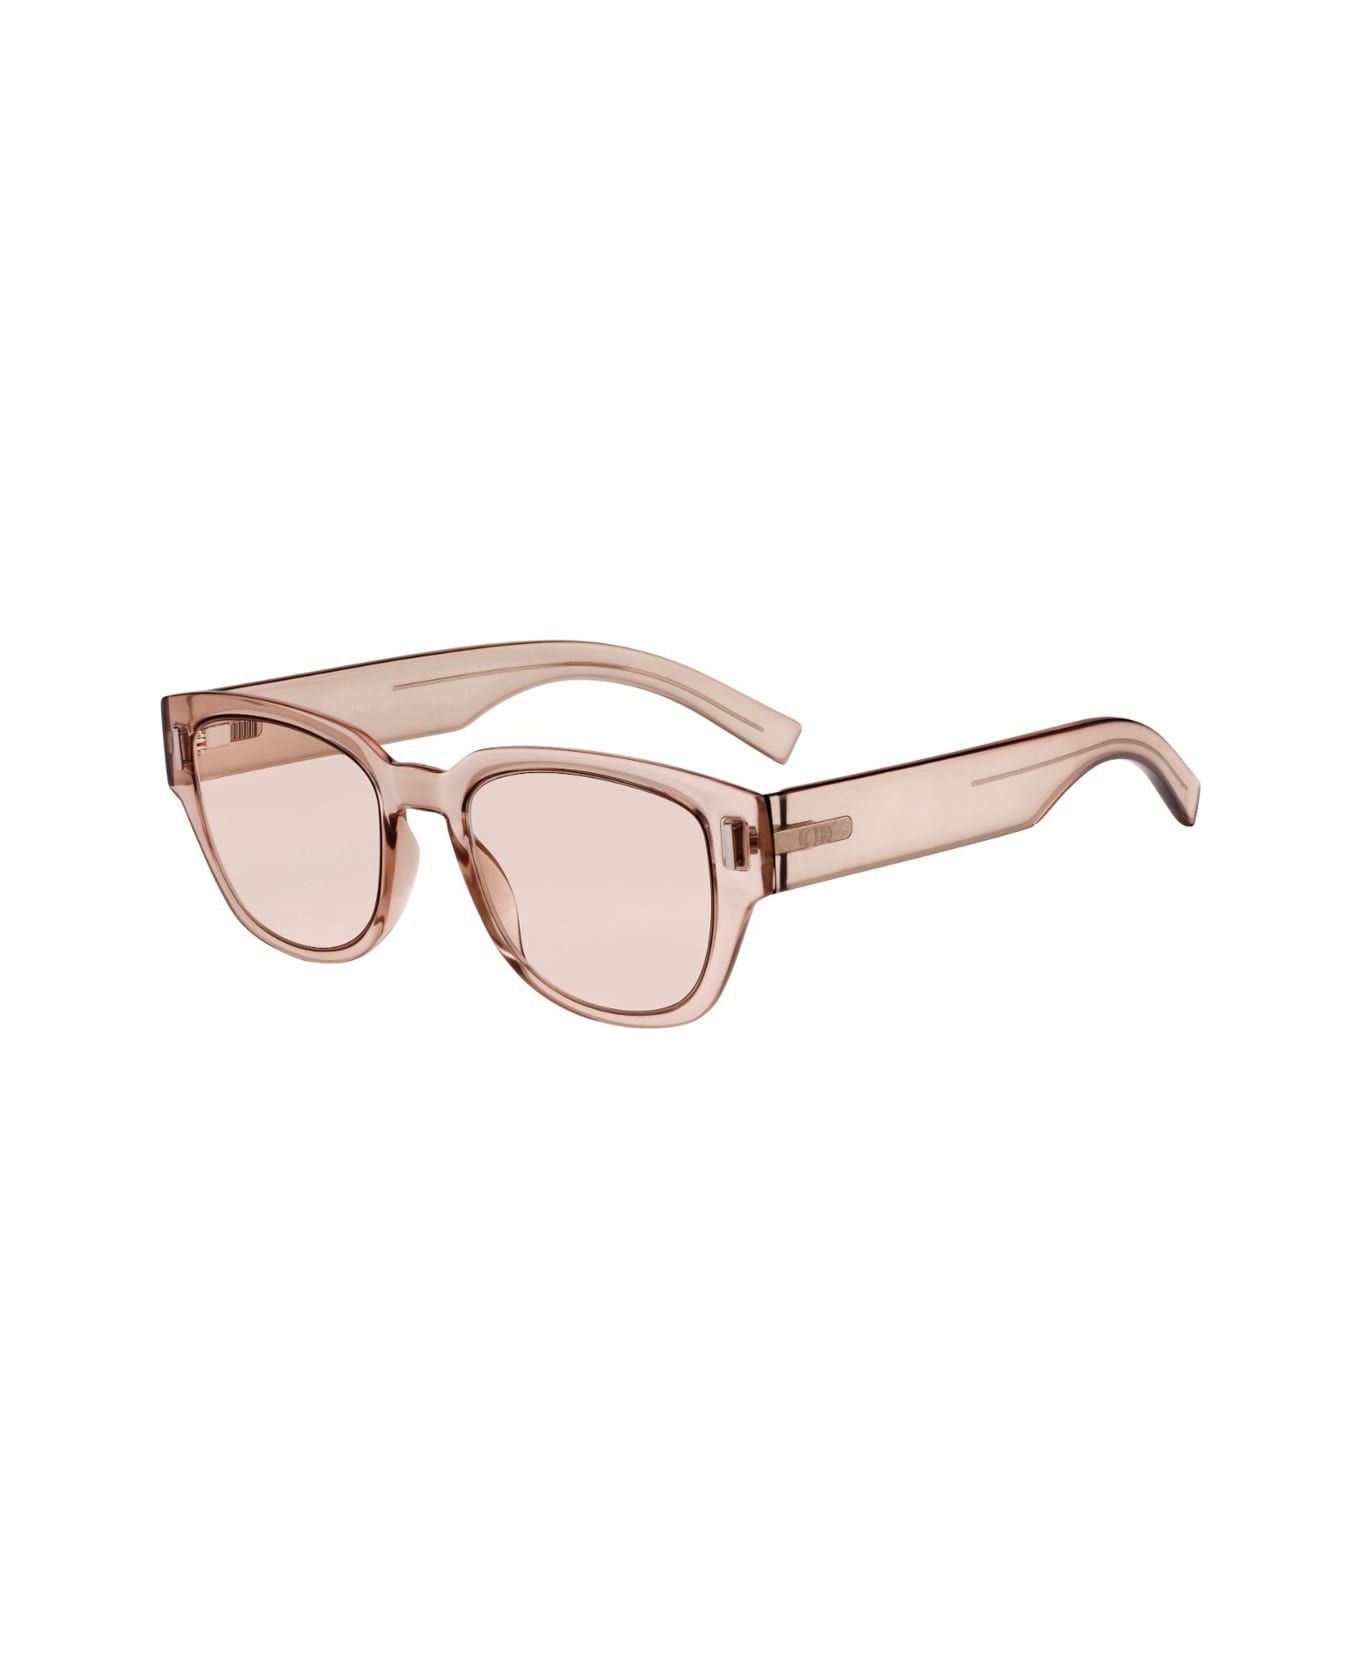 Dior Eyewear Fraction 3 Sunglasses - Rosa